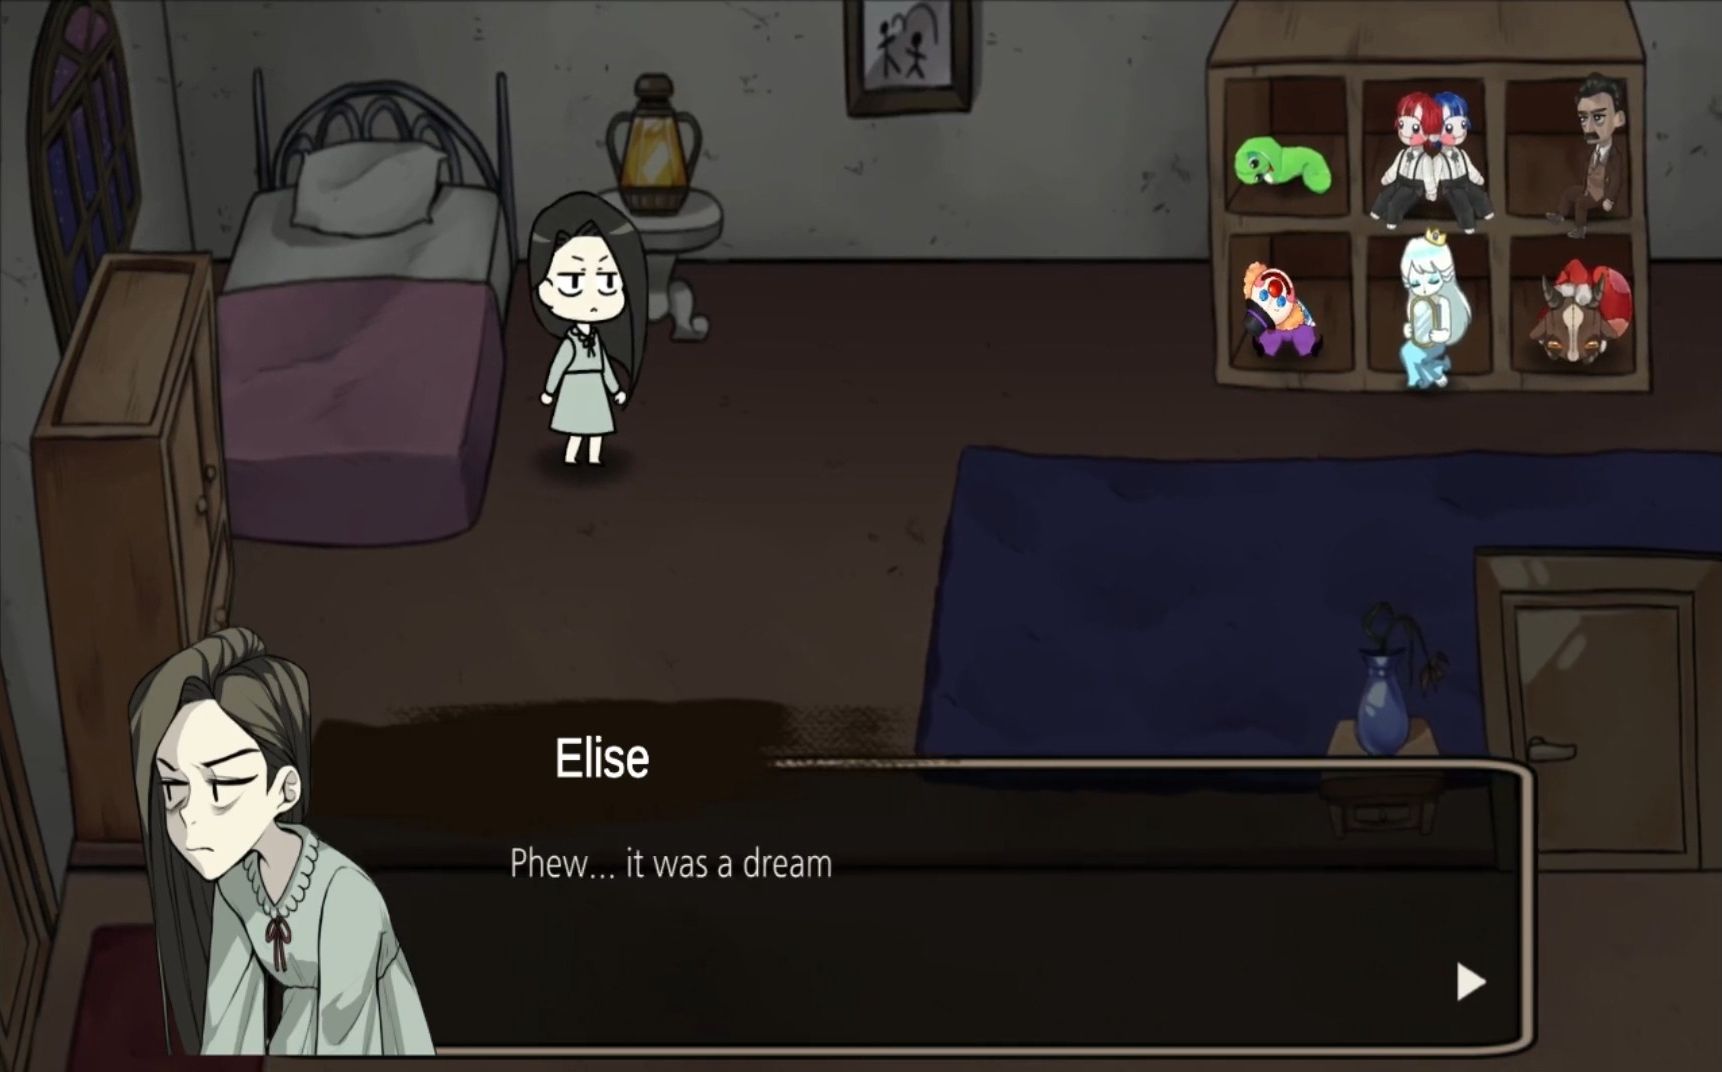 Elise's Nightmare